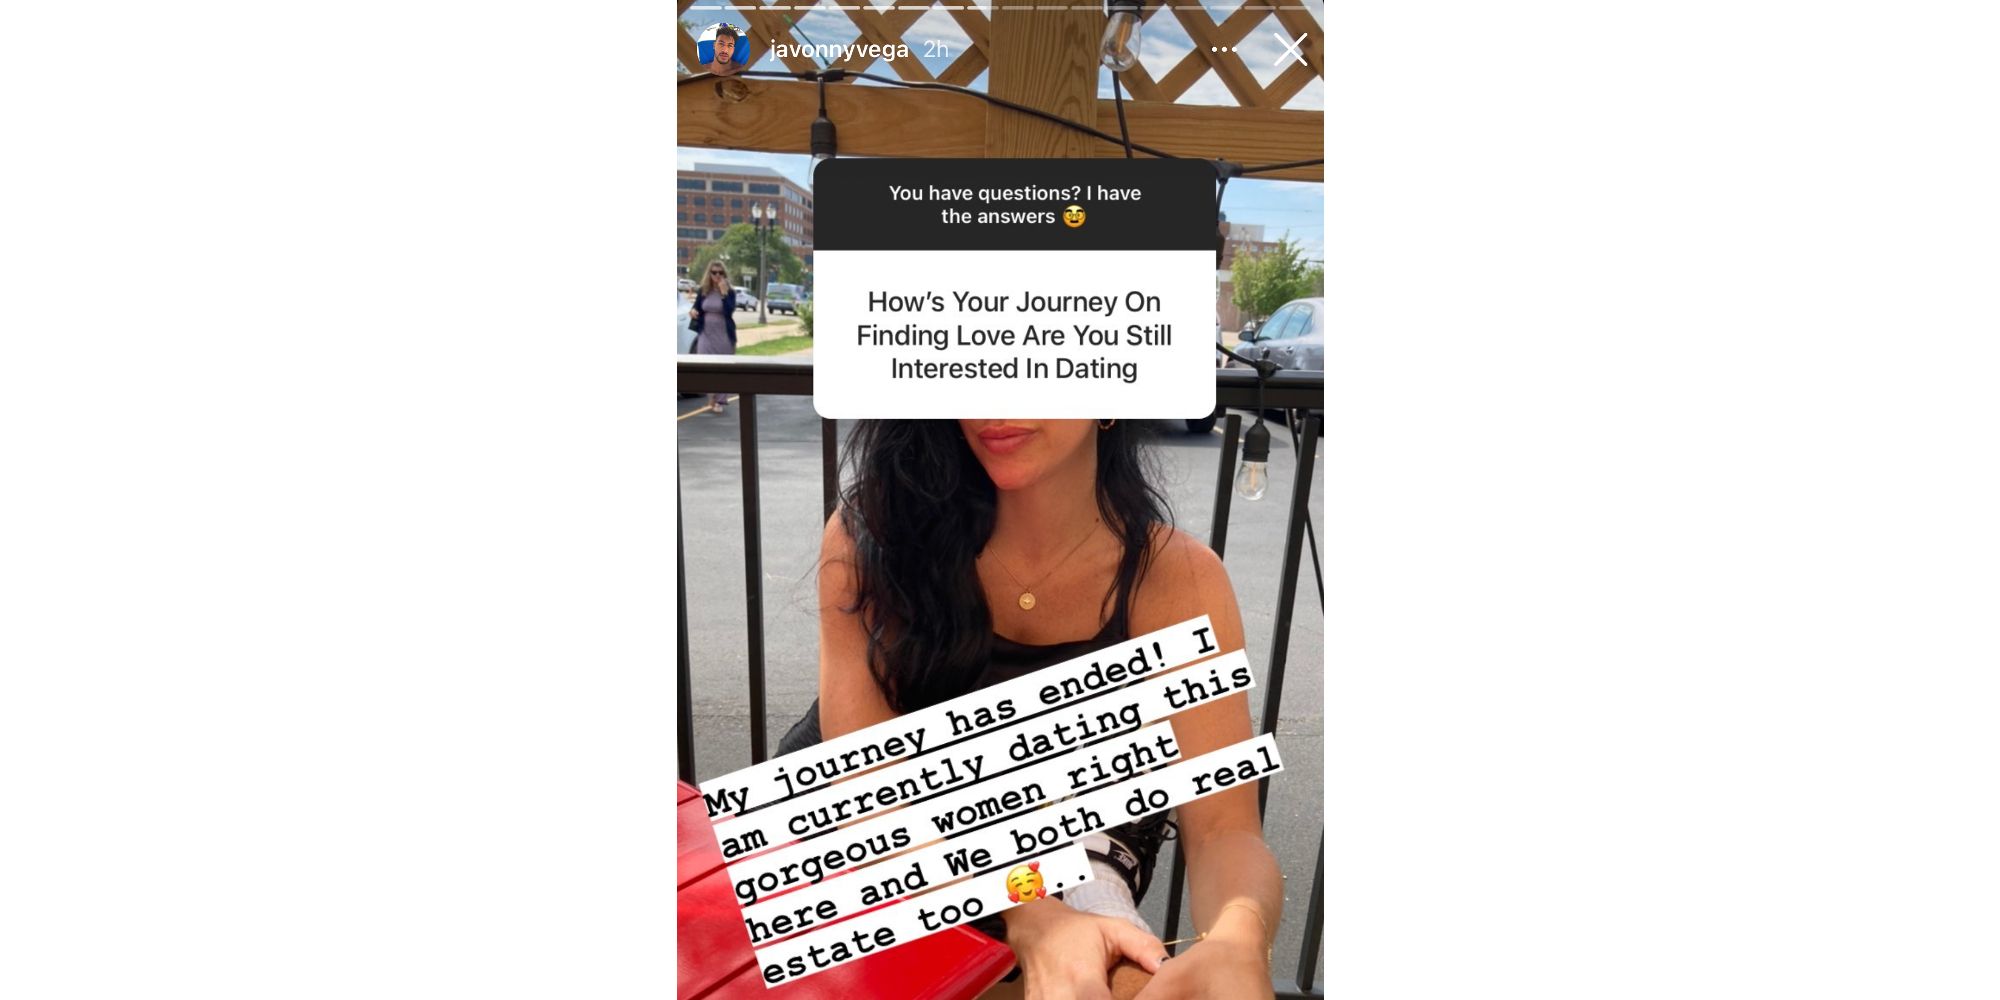 Javonny Vega from Love Island USA season 3 reveals new girlfriend via Instagram Story